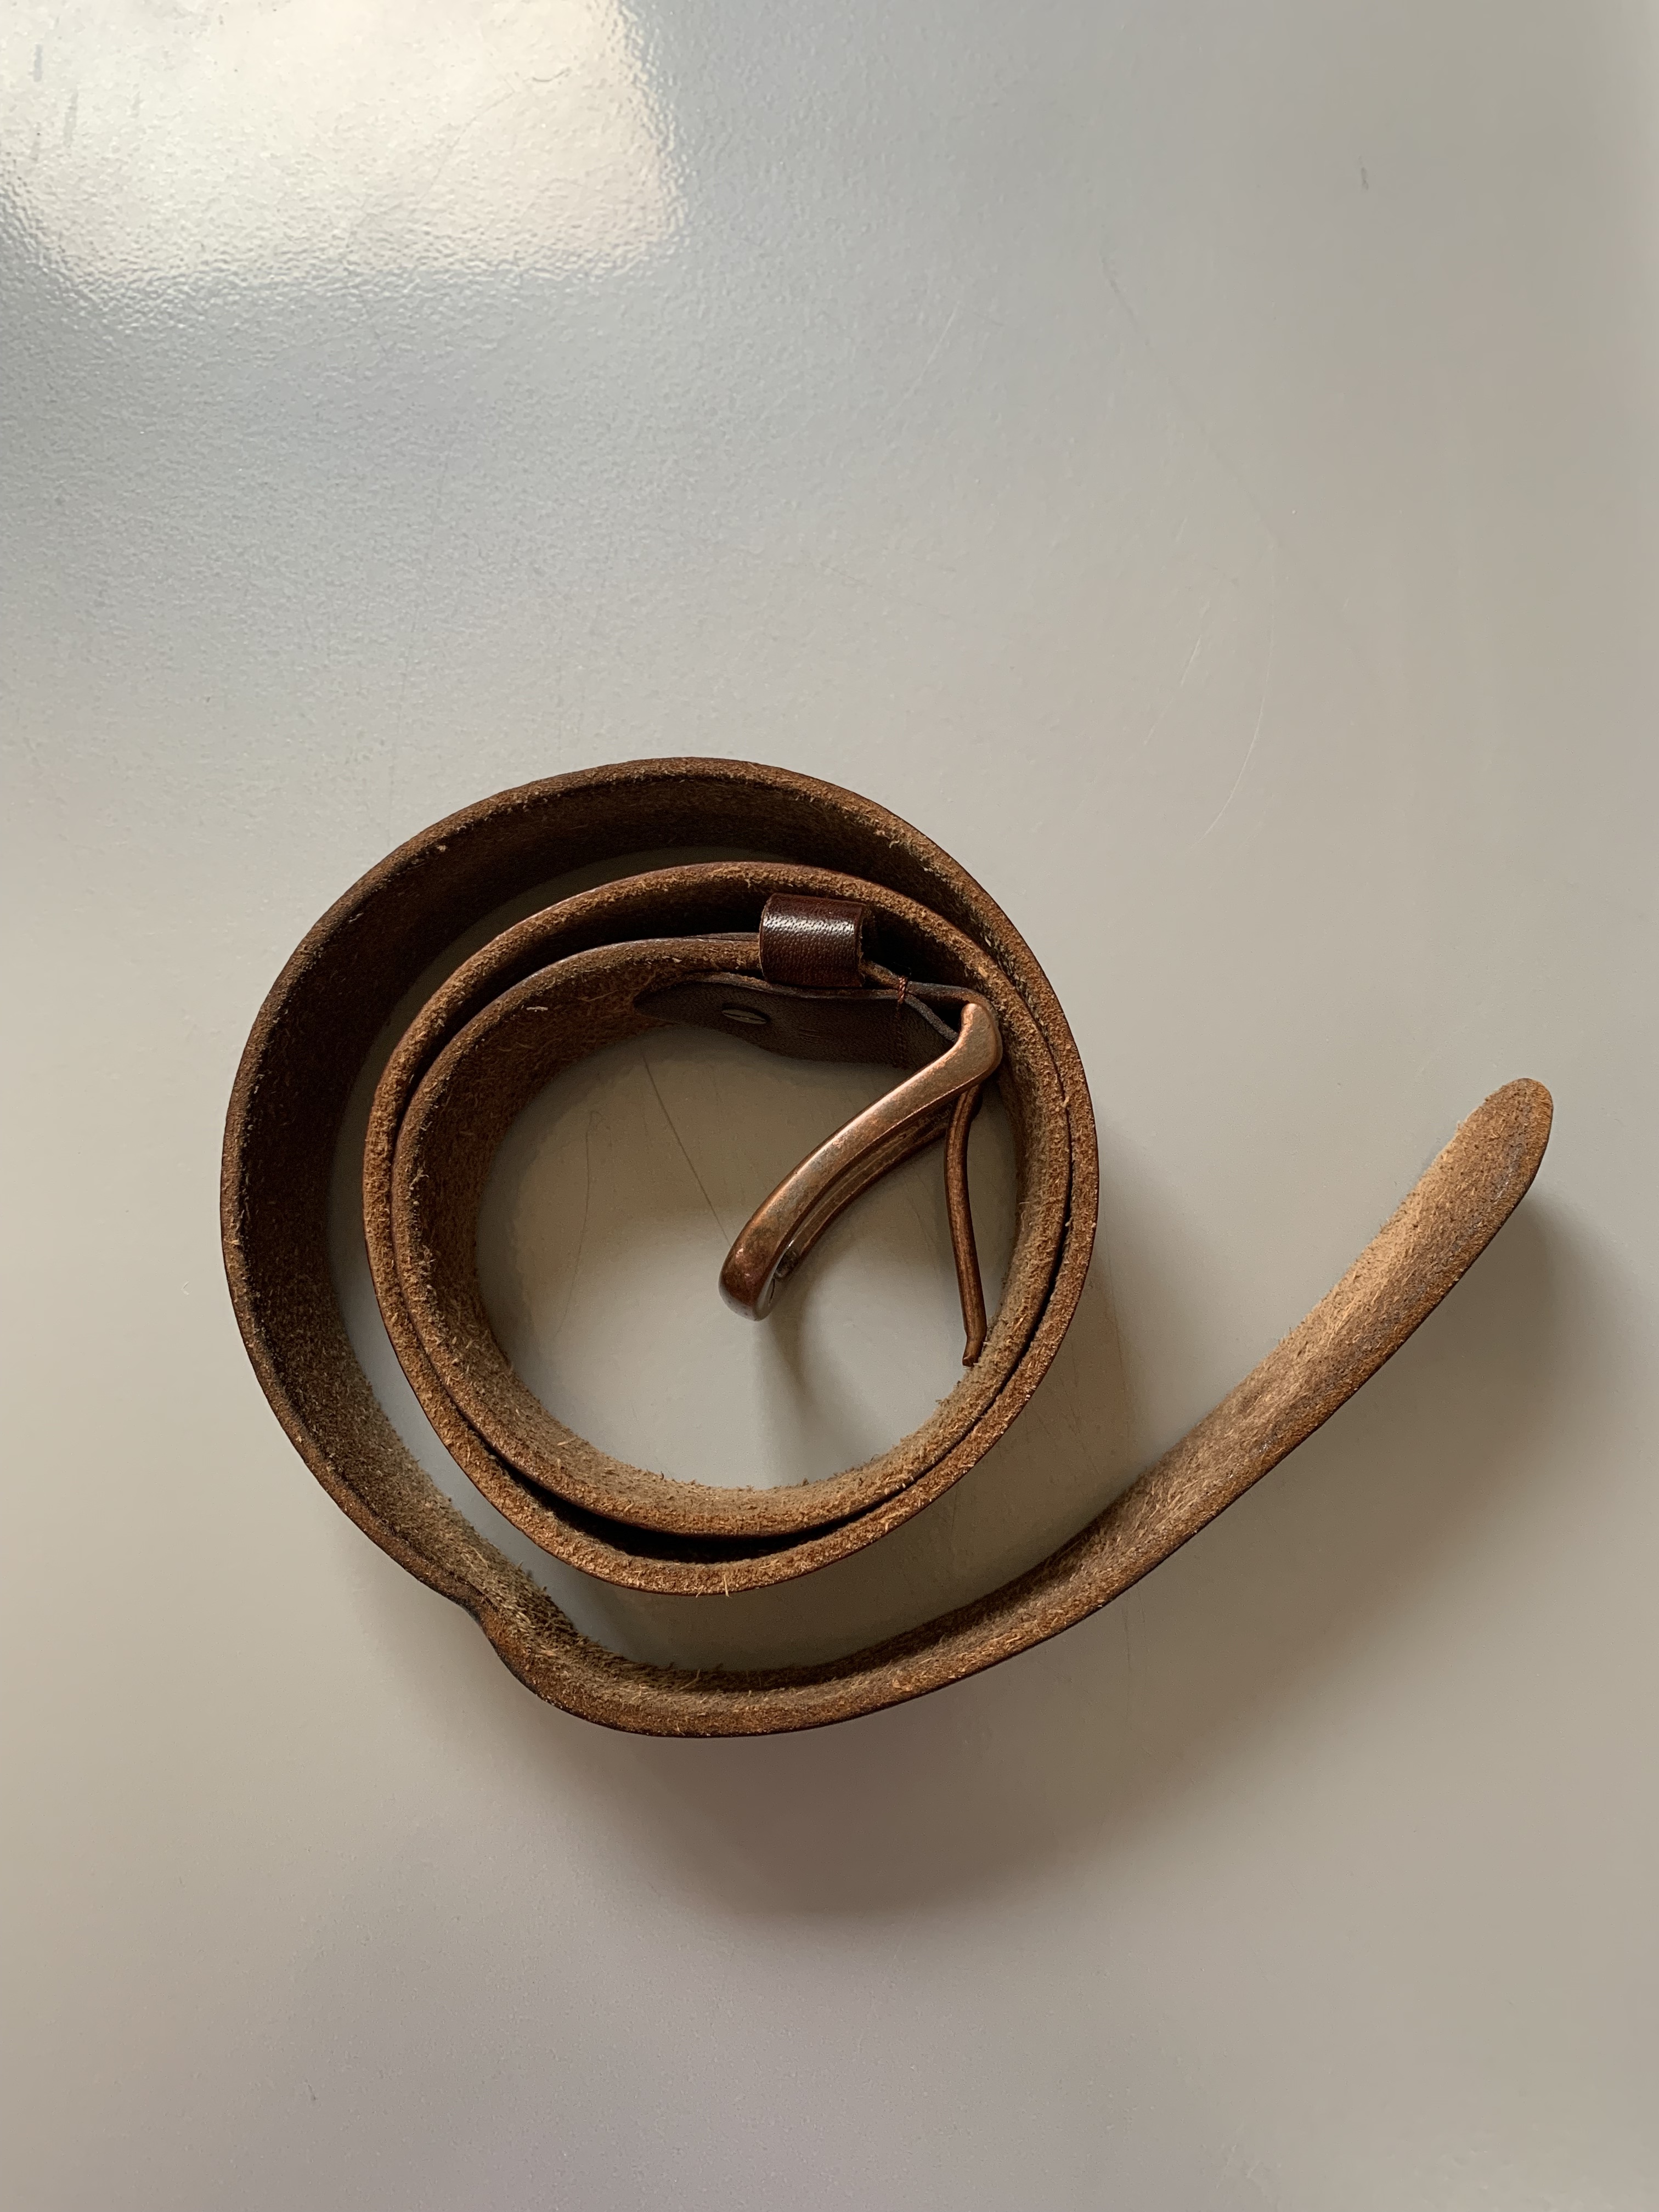 A man's leather belt